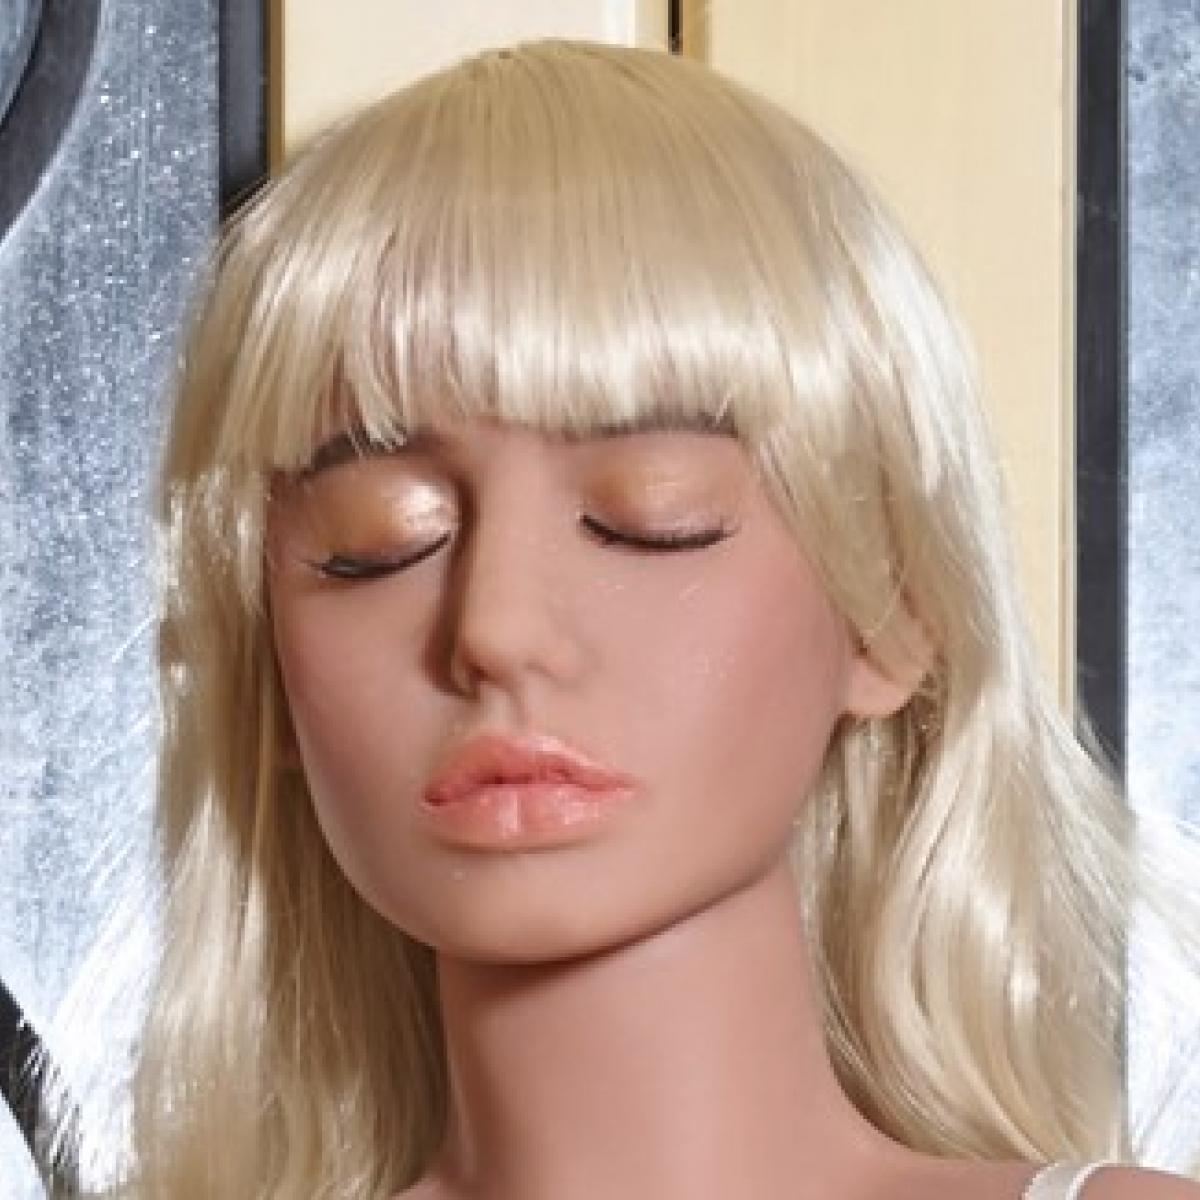 Neodoll Racy Aurora - Sex Doll Head - M16 Compatible - Brown